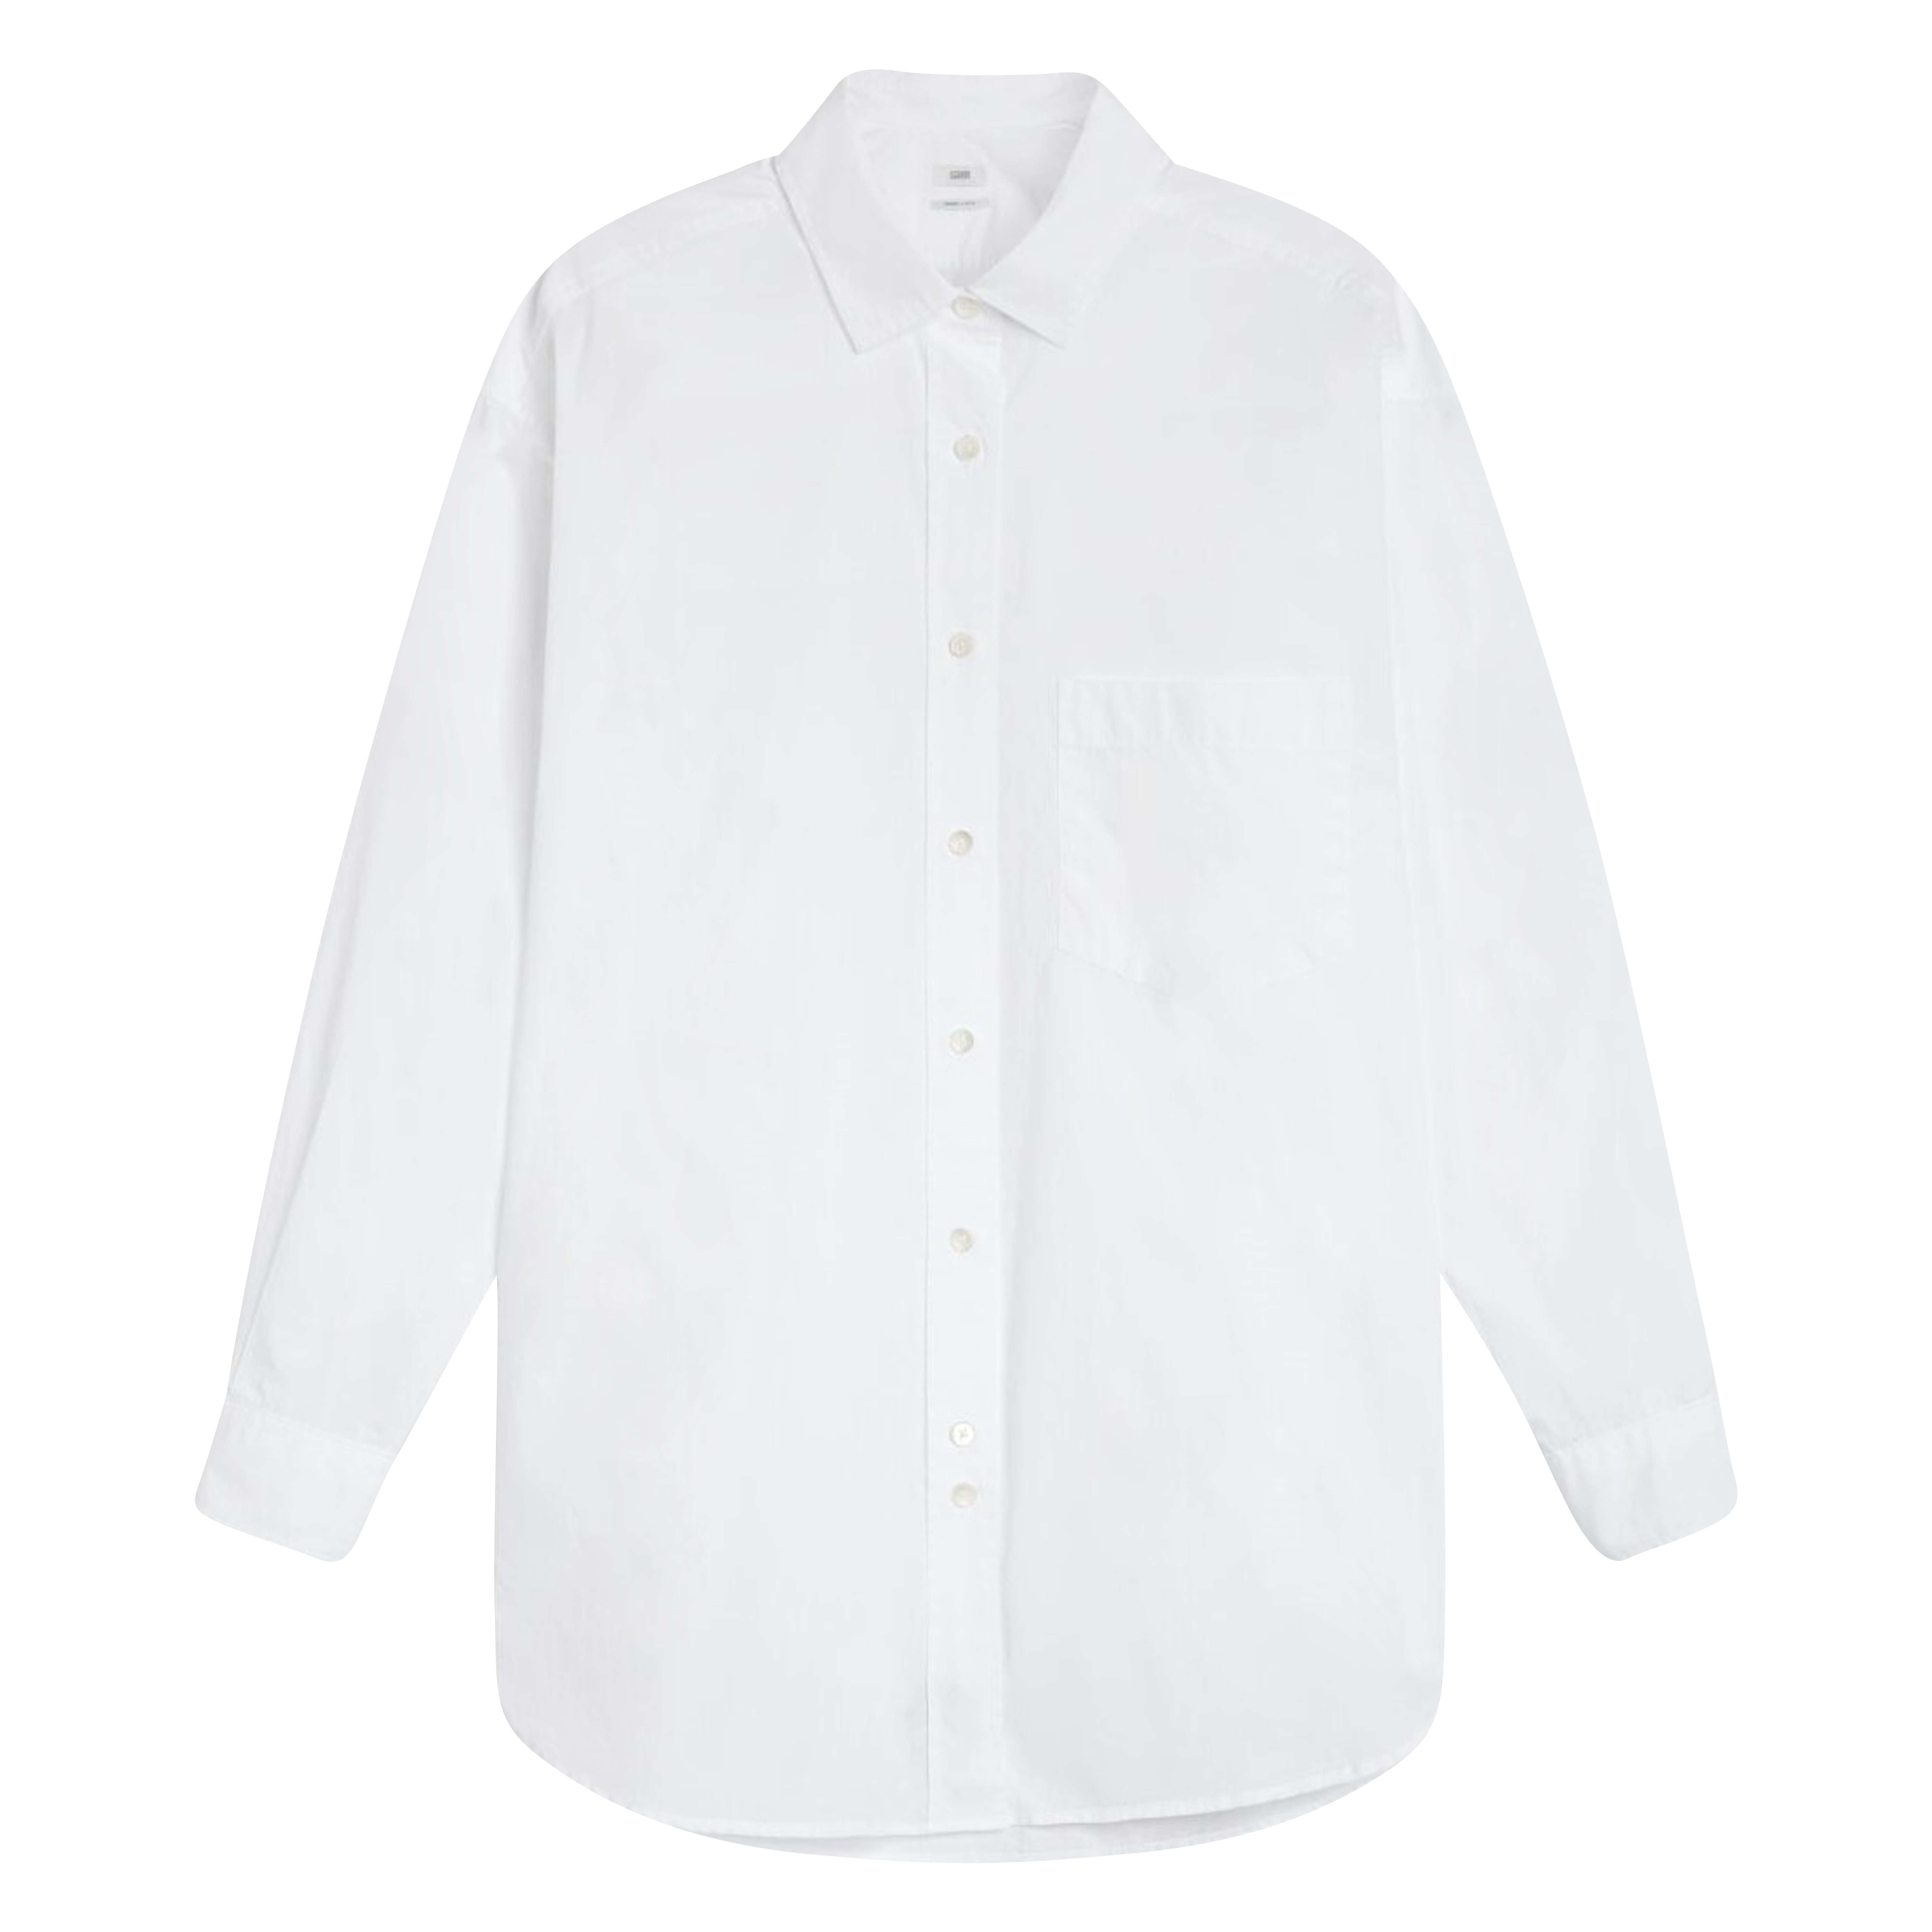 Closed Basic Shirt in White